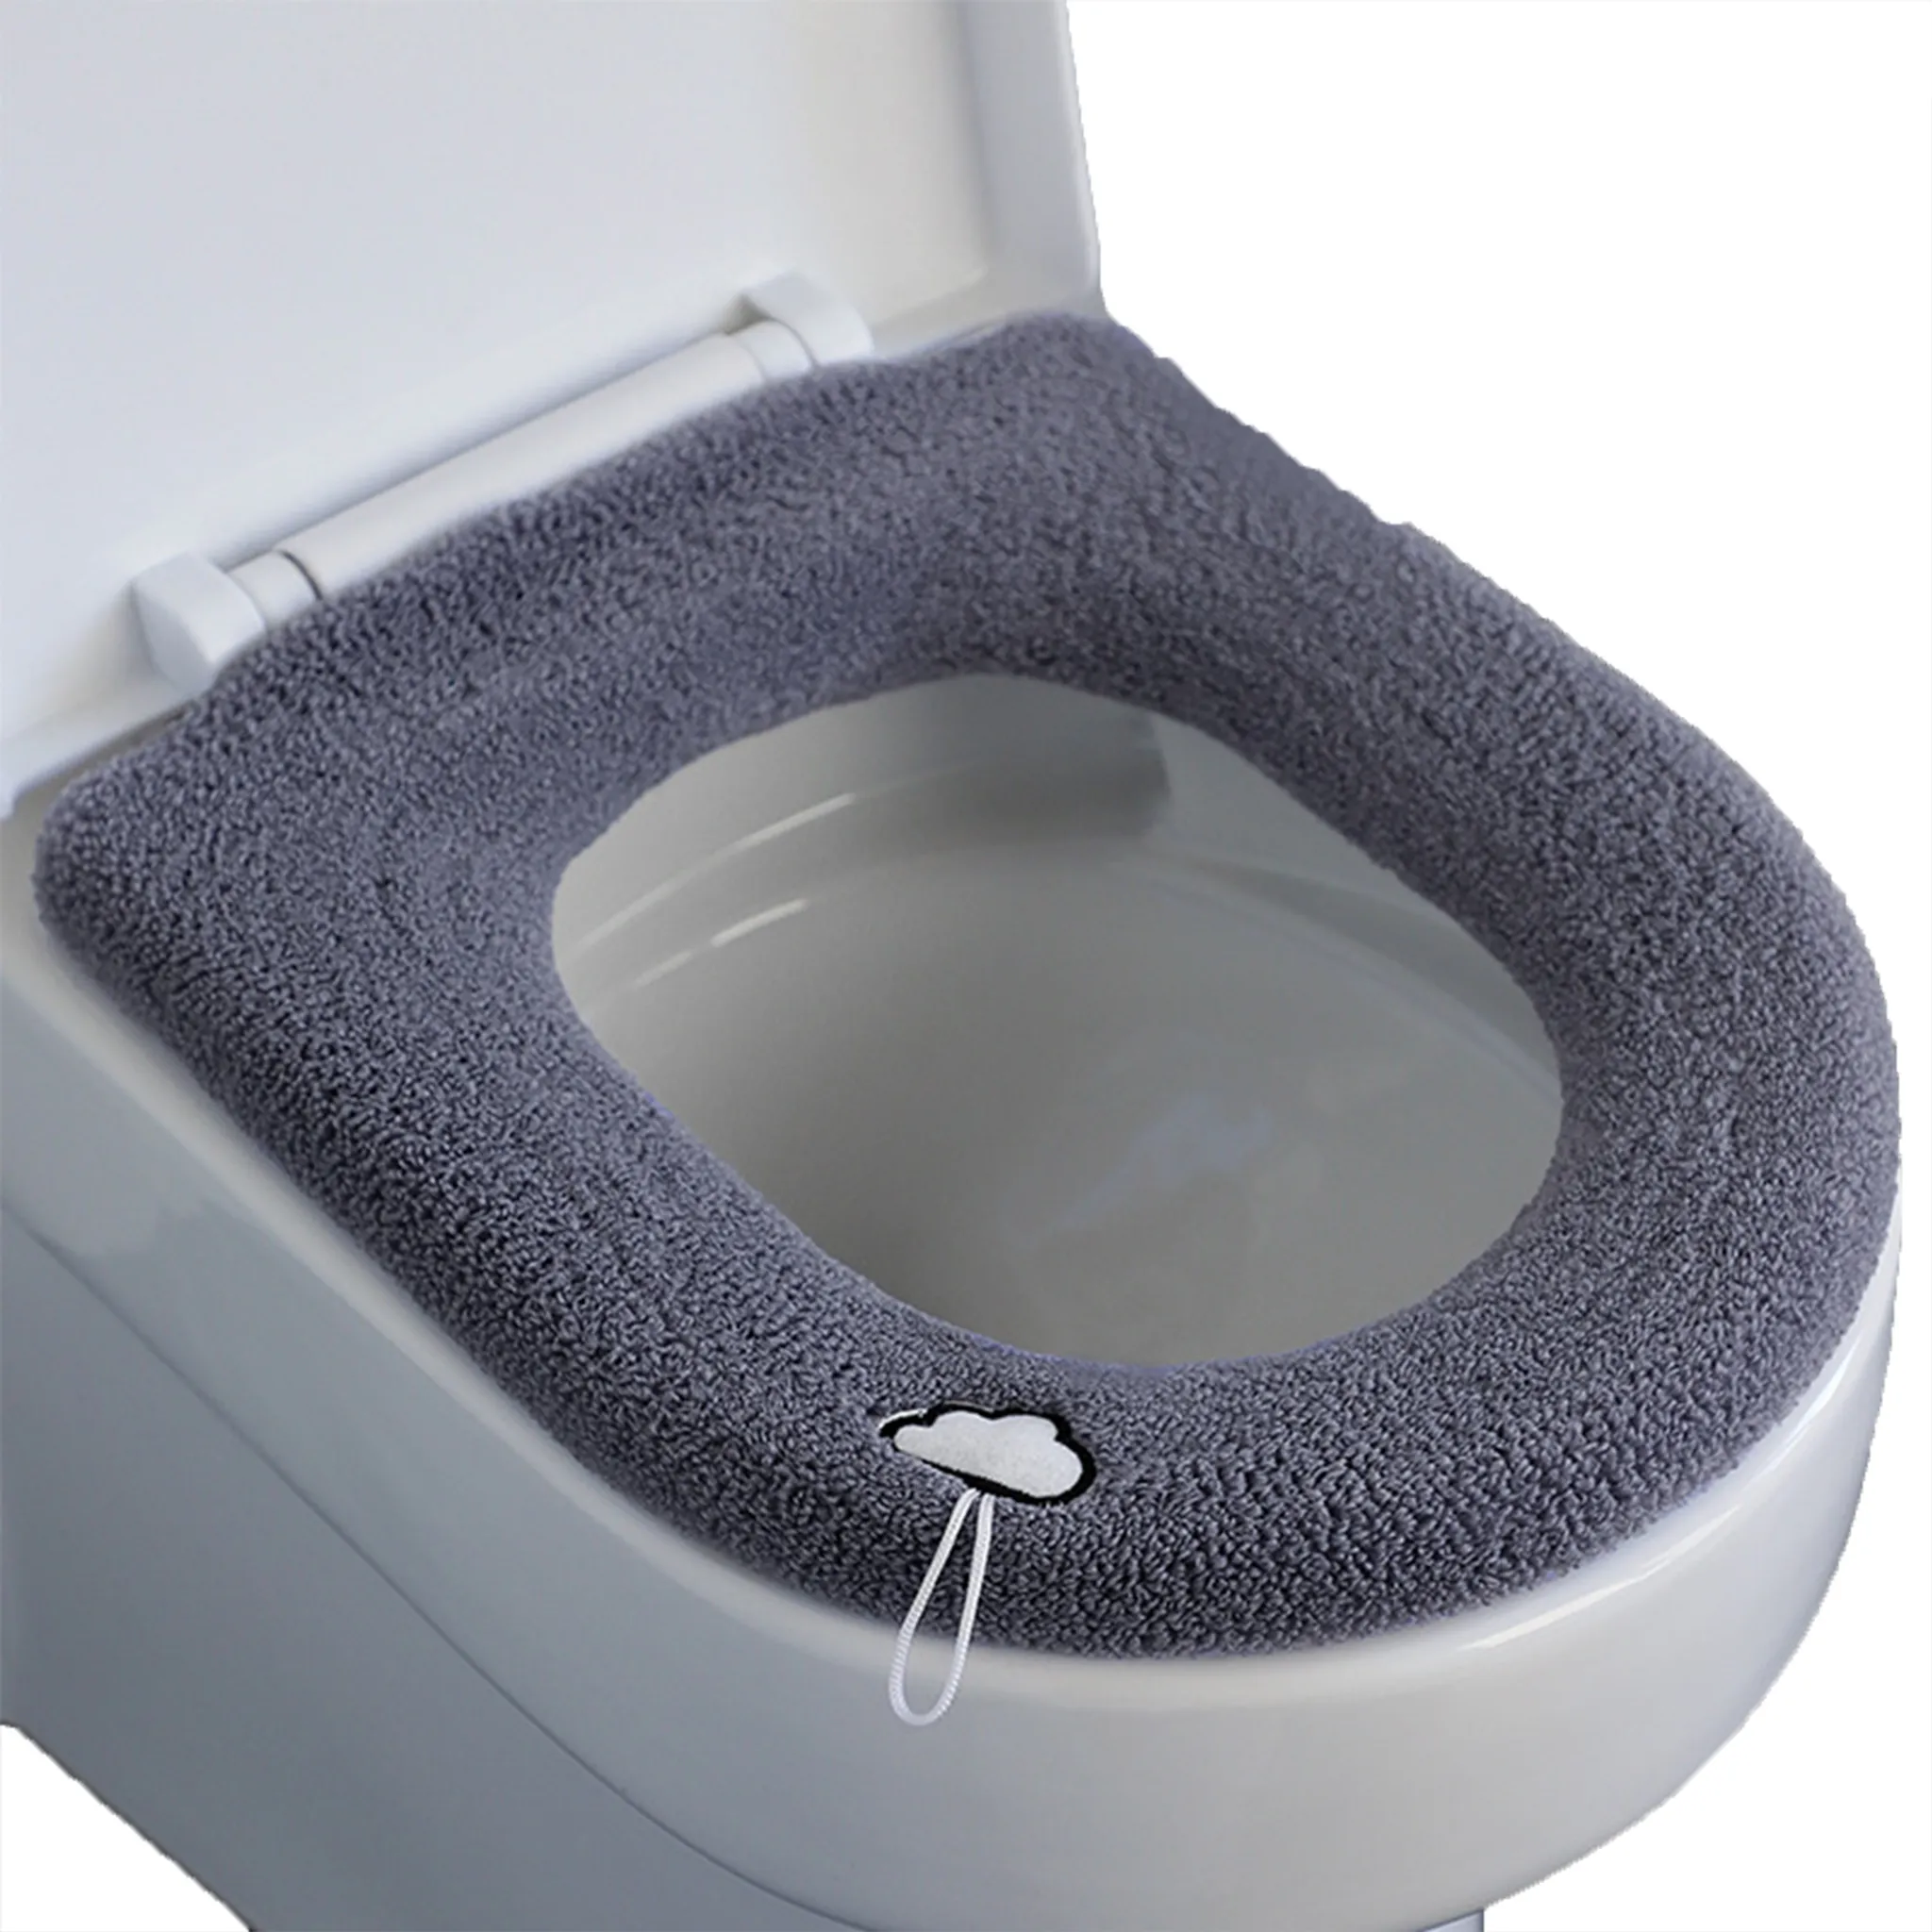 Winter Warme Toilette Sitzbezug Closestool Matte Waschbare